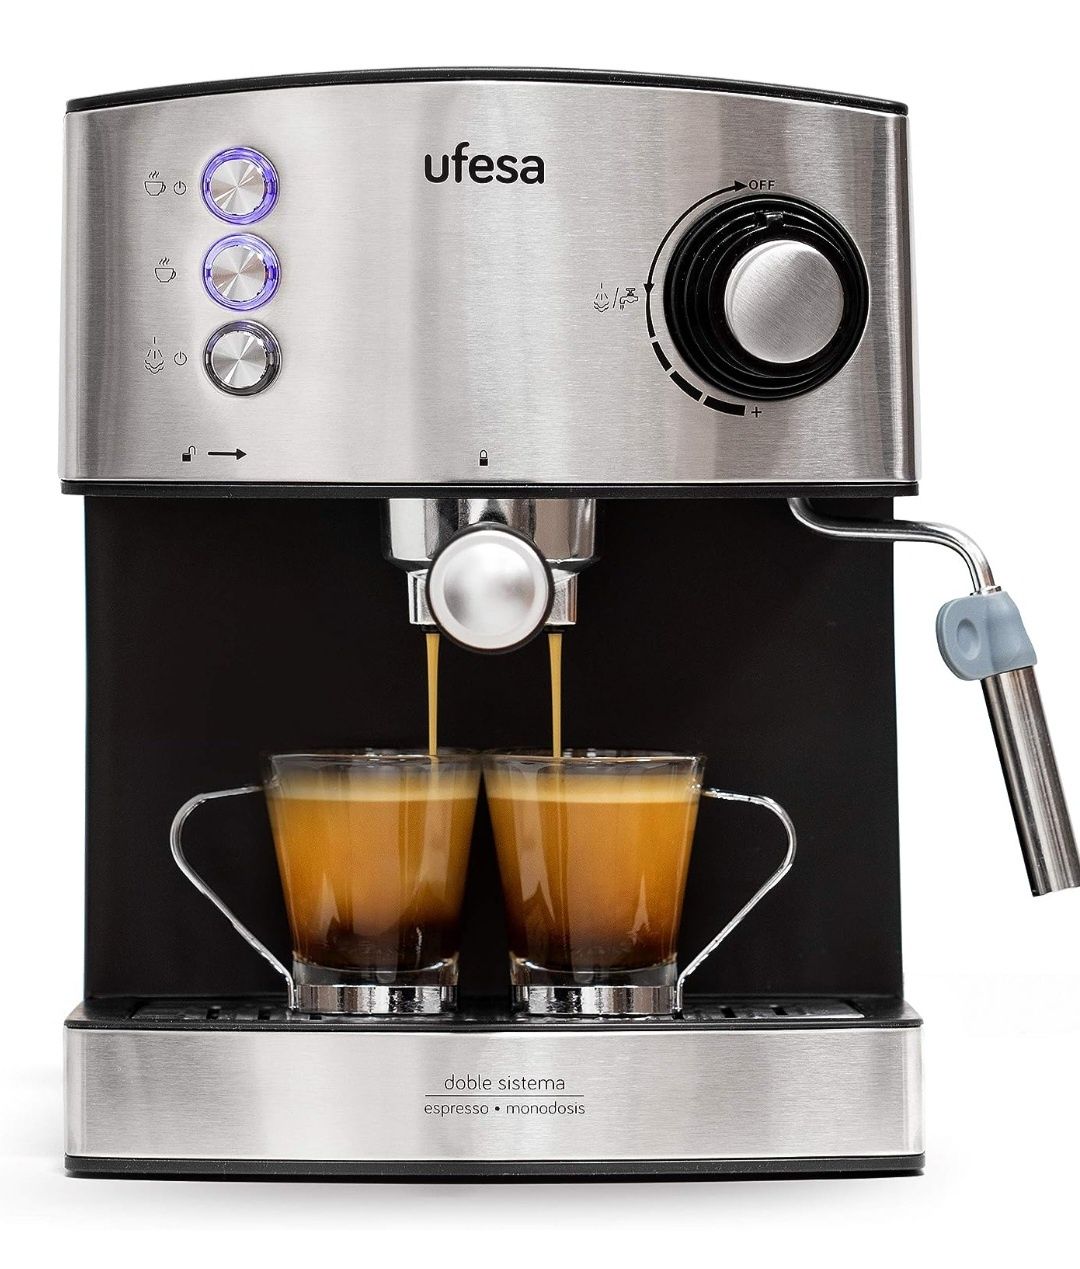 Máquina de Café Ufesa